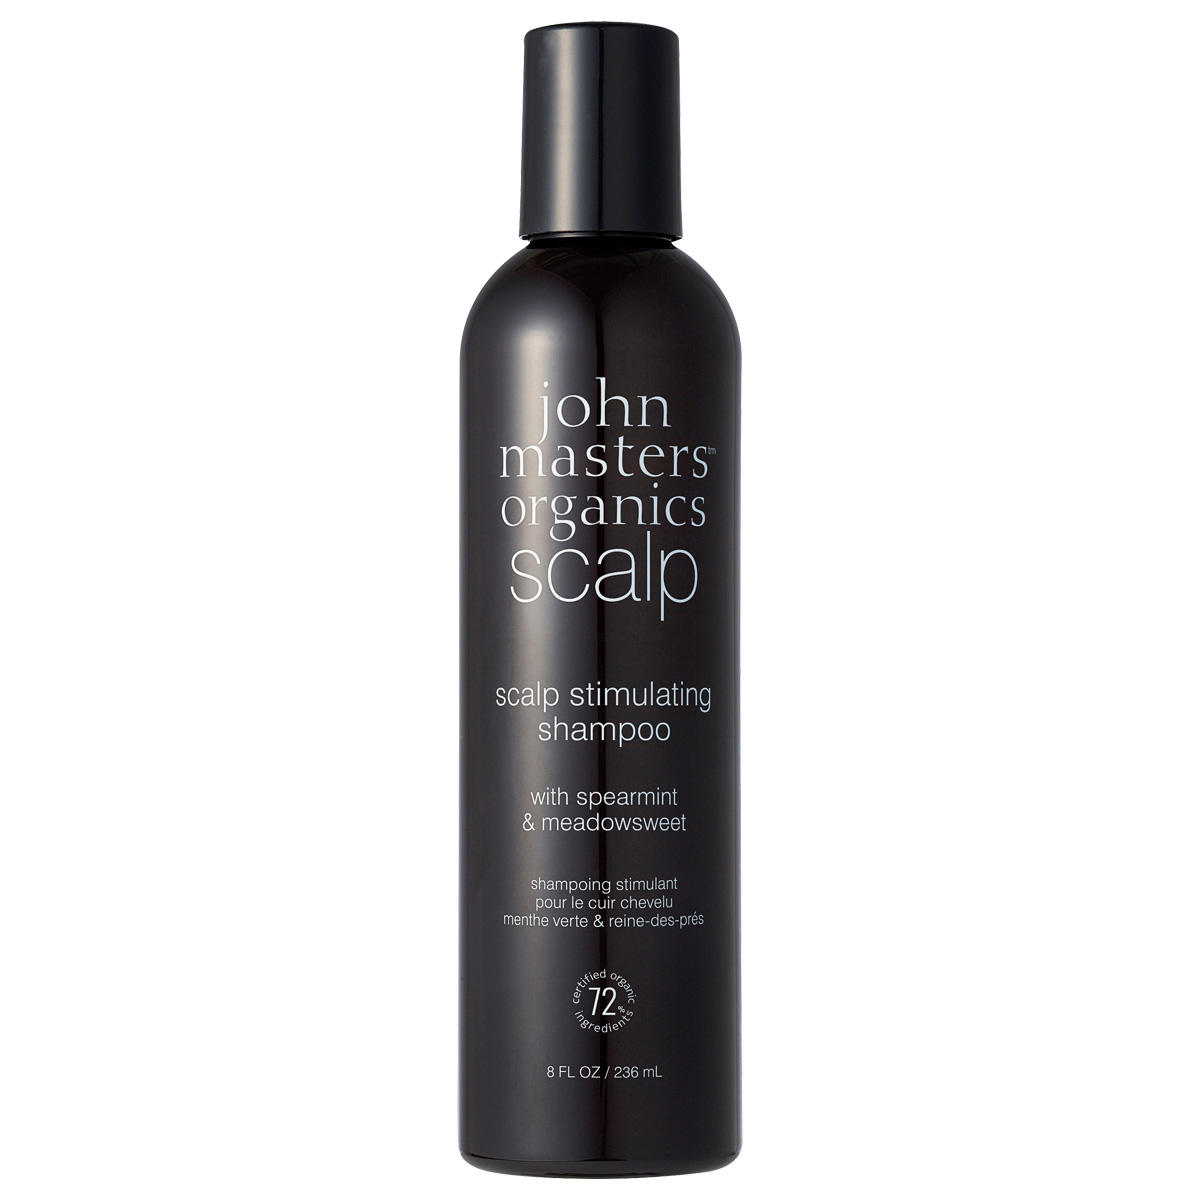 John Masters Organics Spearmint & Meadowsweet Scalp Stimulating Shampoo
 236 ml - 1